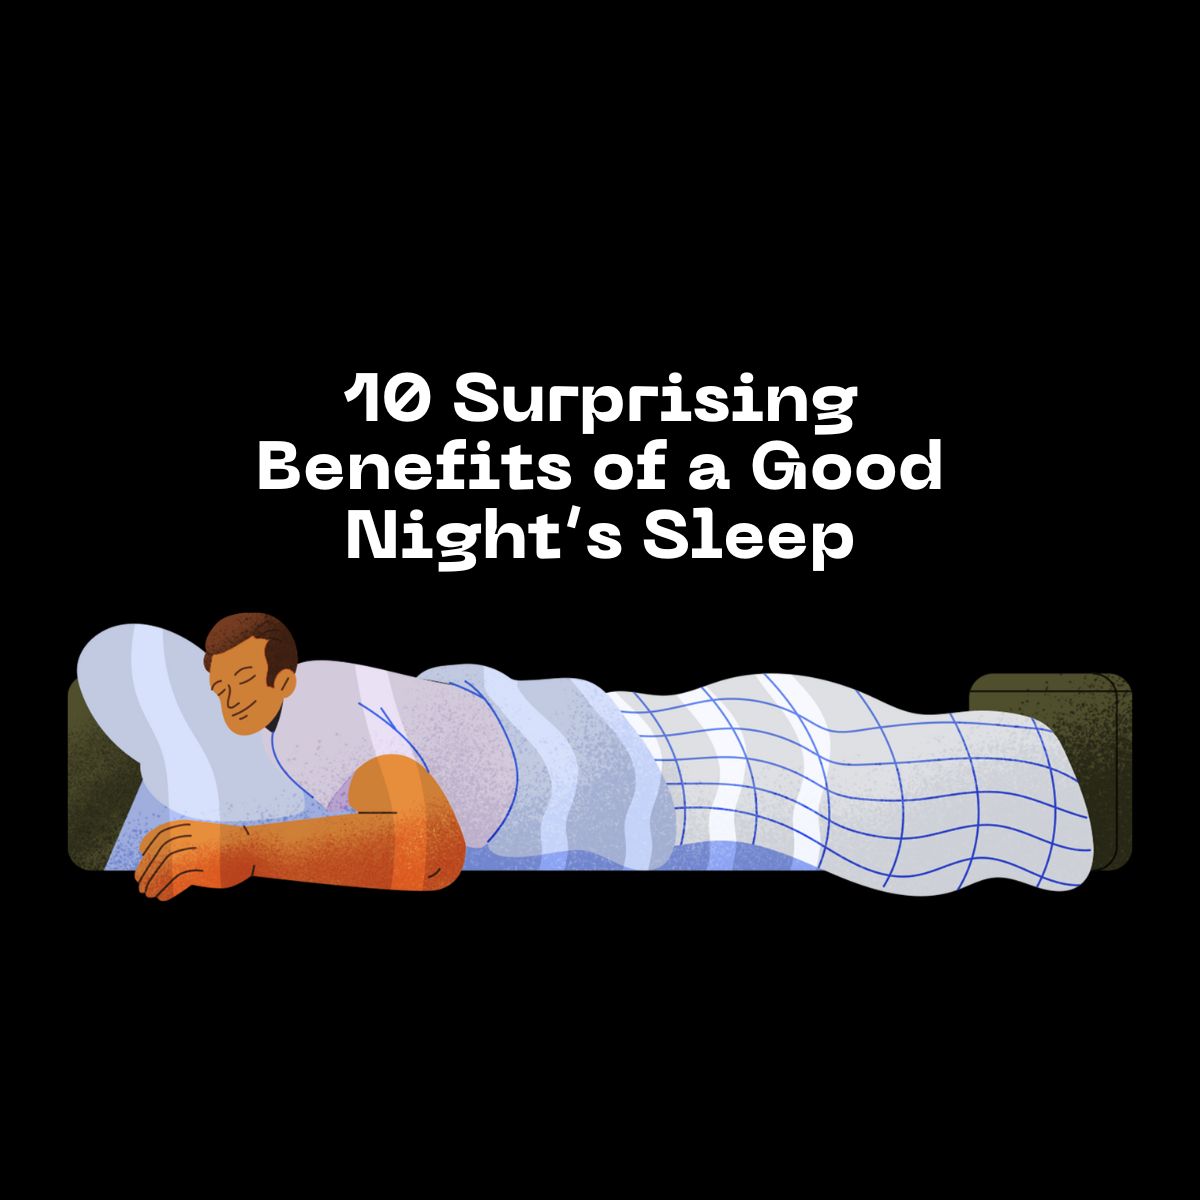 10 Surprising Benefits of a Good Night’s Sleep